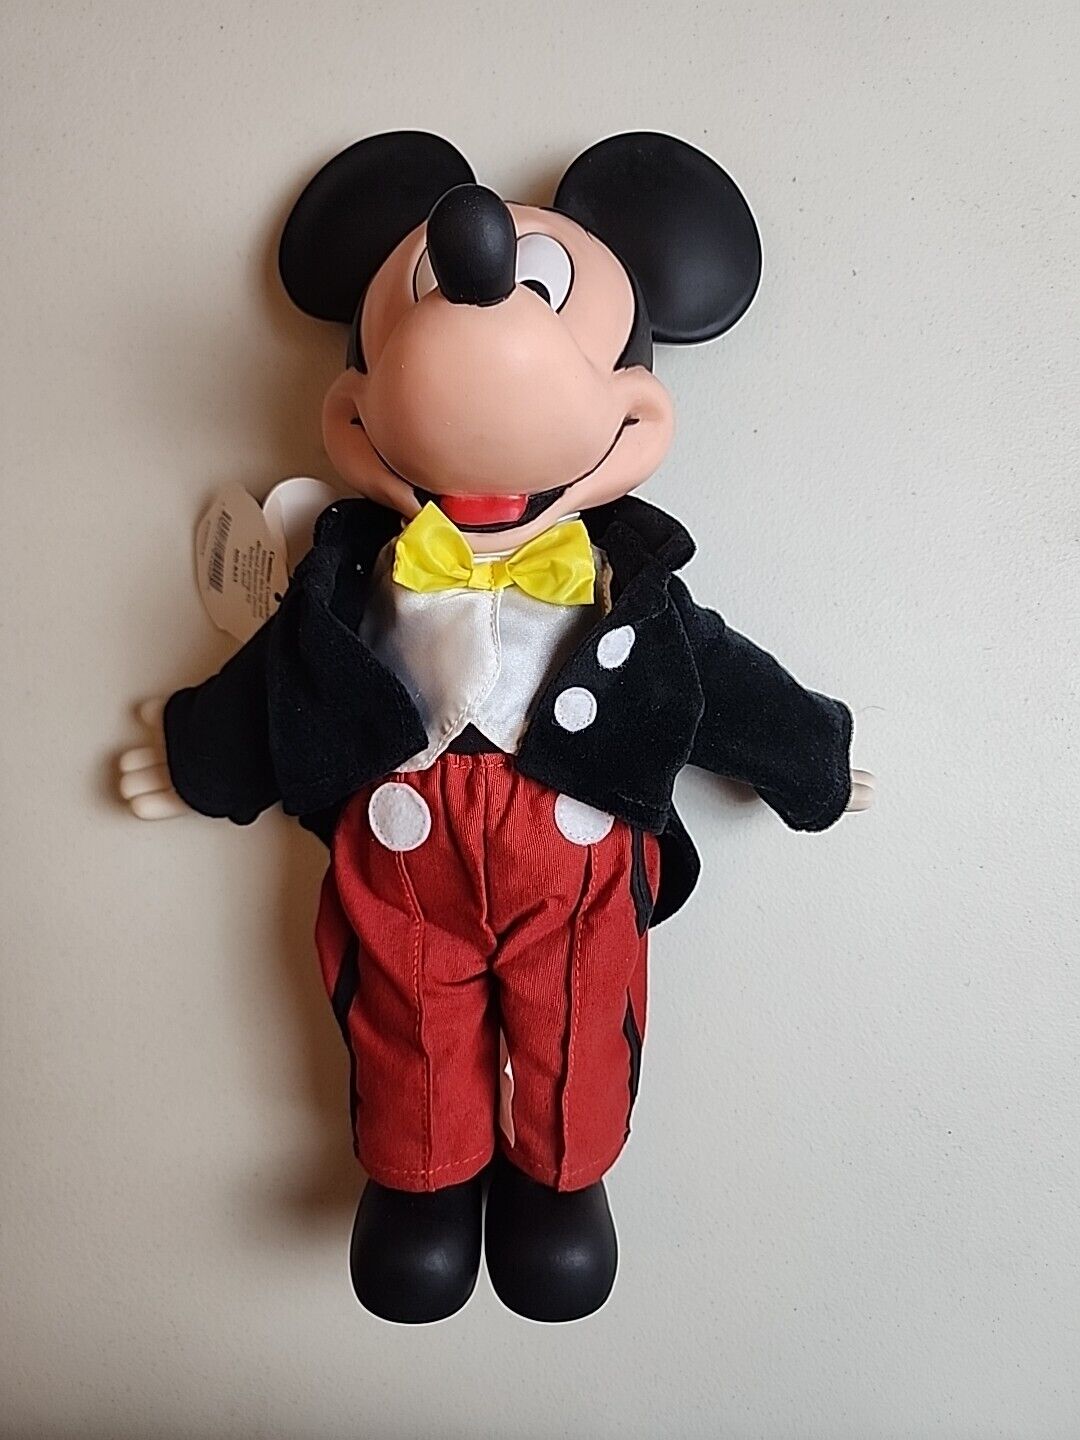 Vintage 1990’s Walt Disney World MICKEY MOUSE 14” plush doll with vinyl head